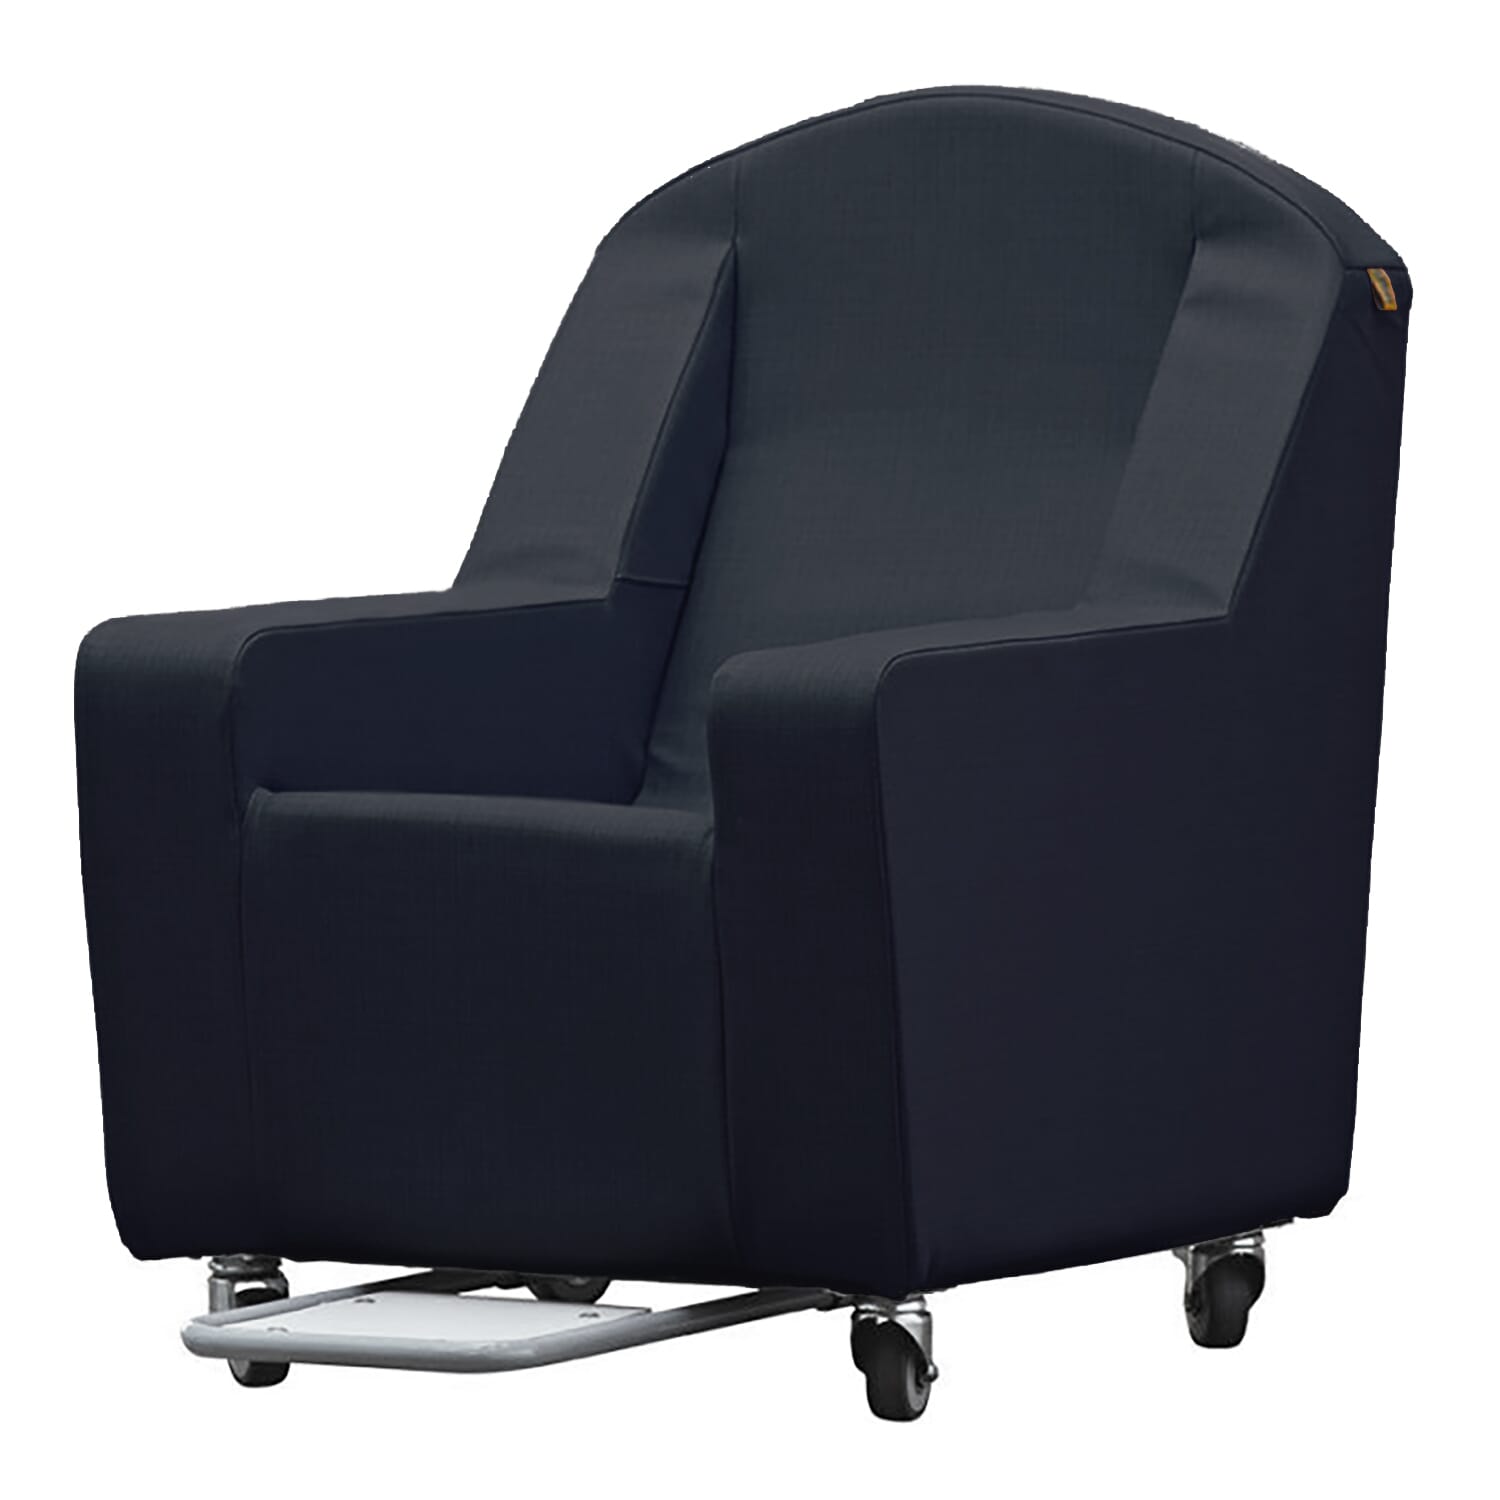 View Kirton Stirling Chair with Sliding Footrest Black Dartex Black Vinyl information